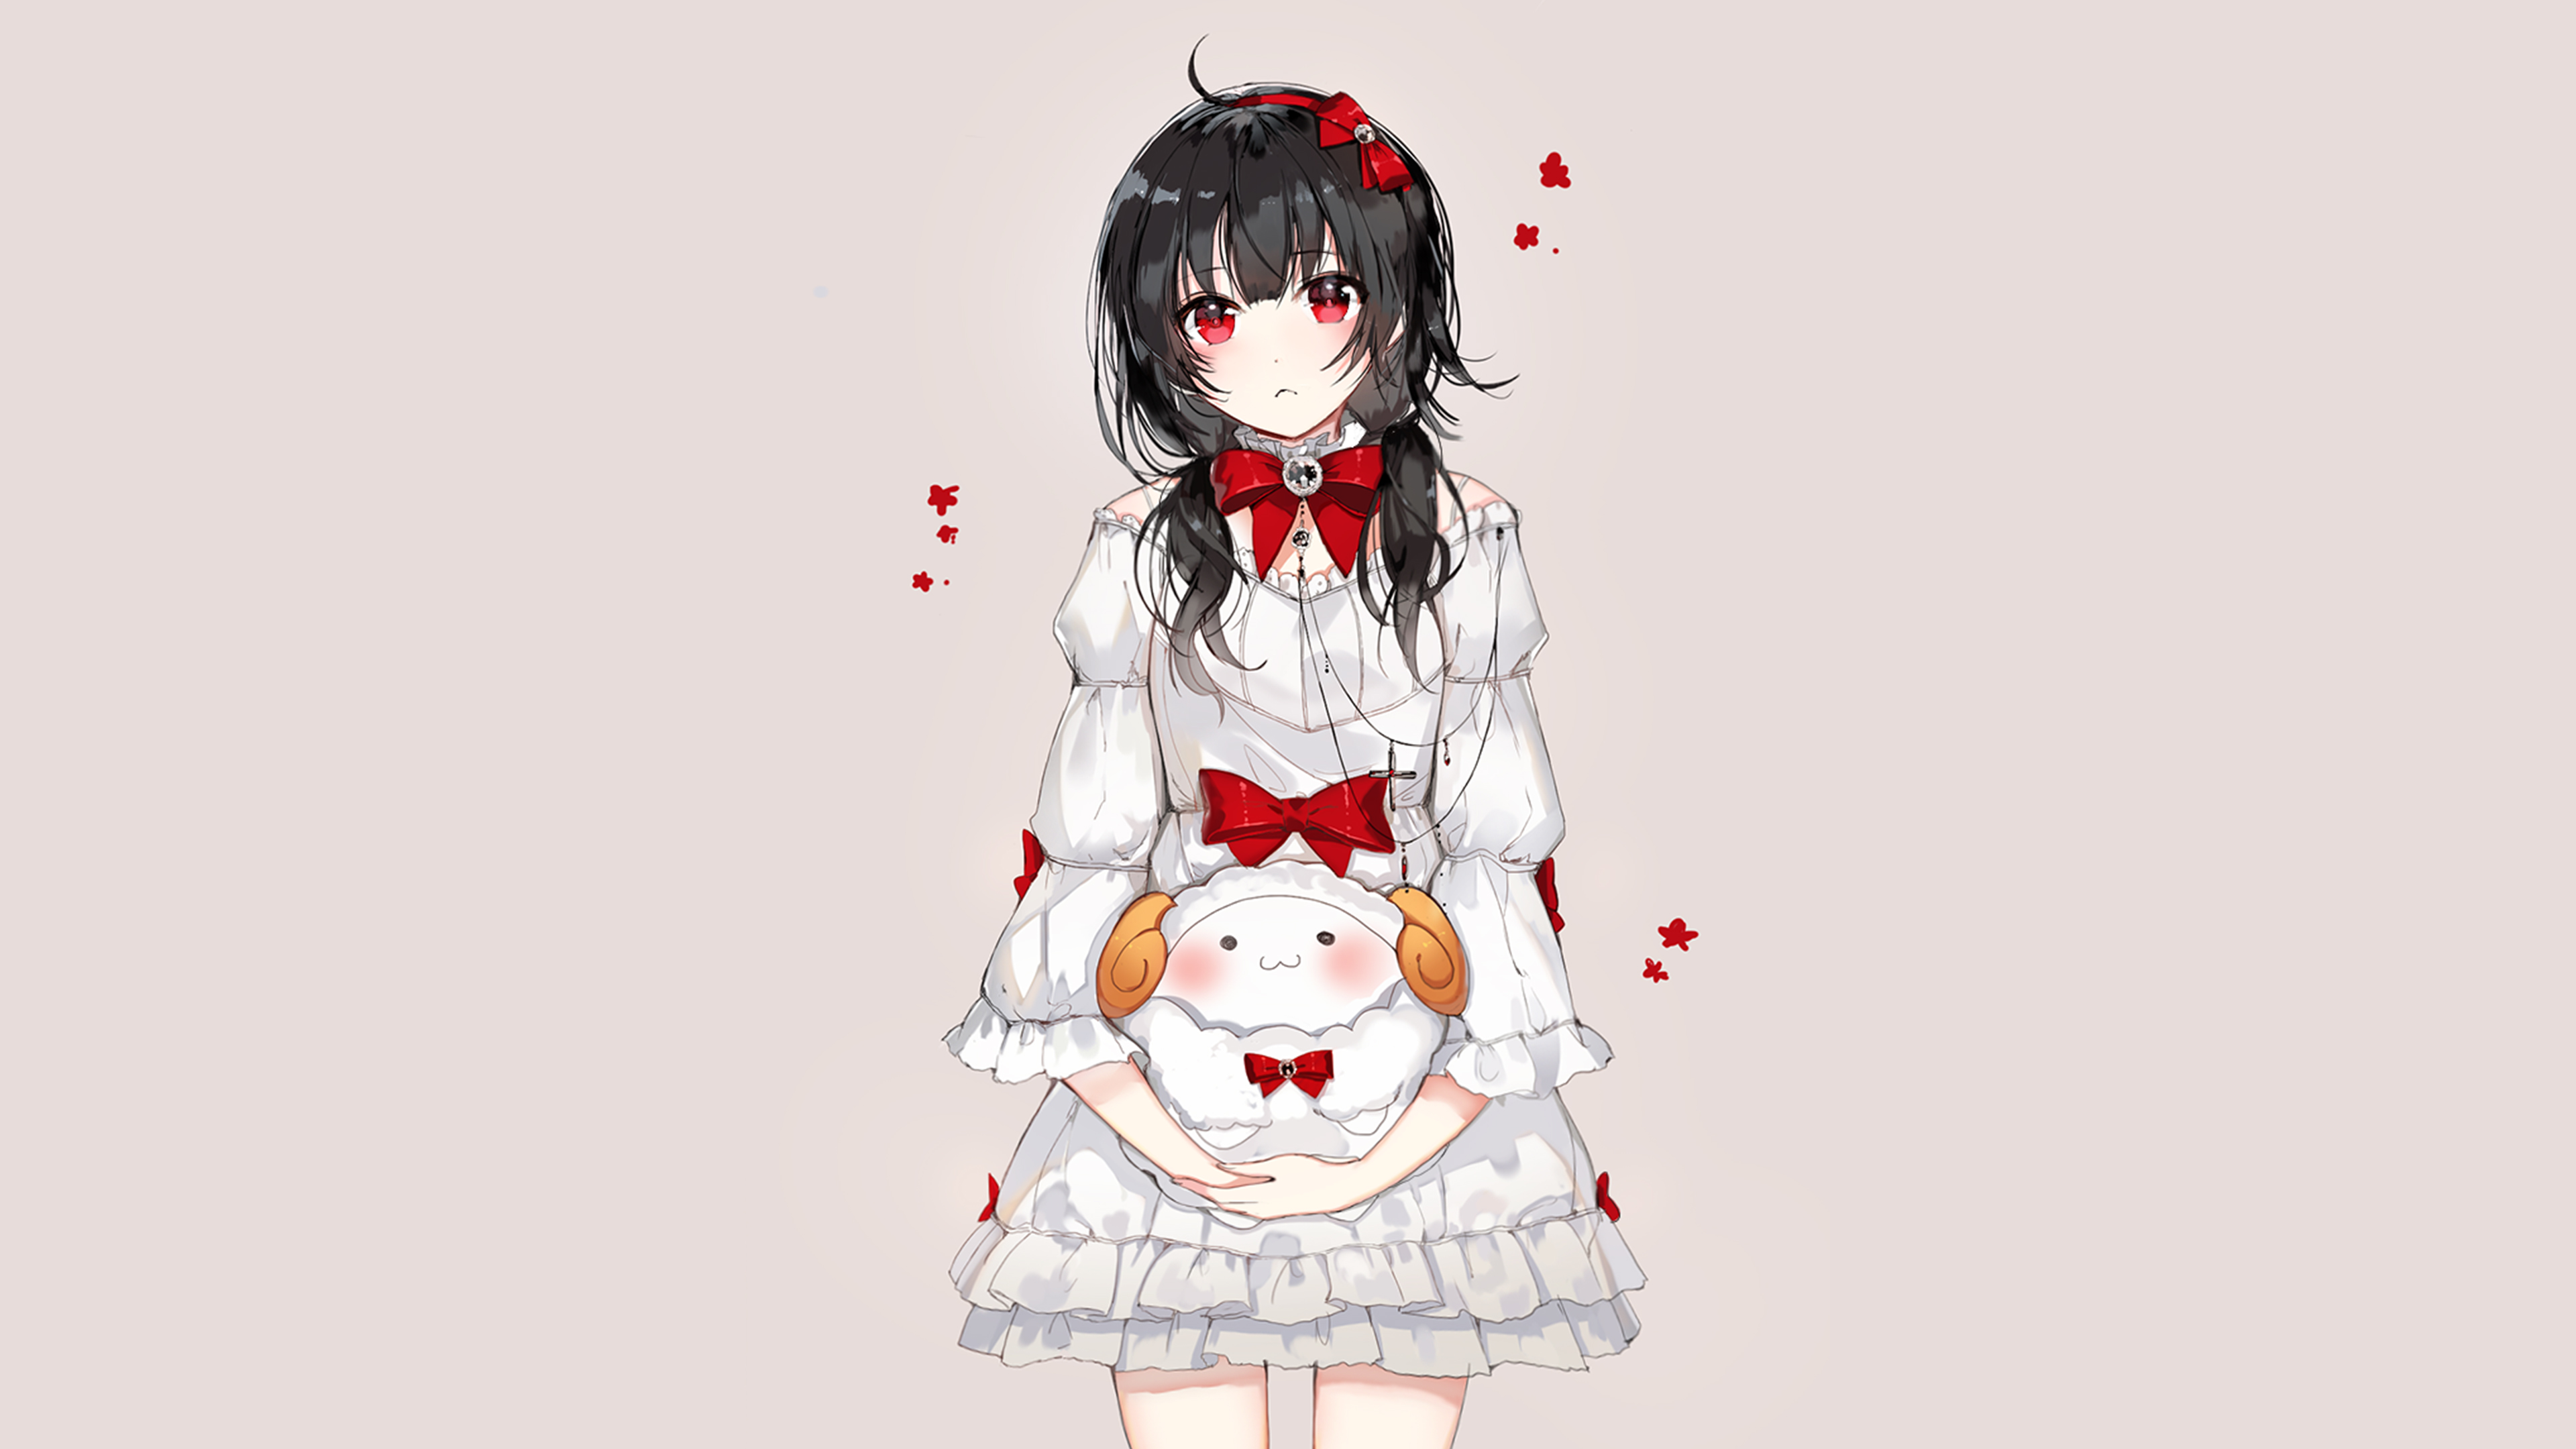 Anime 3840x2160 anime anime girls original characters artwork NaruHana black hair red eyes dress stuffed animal